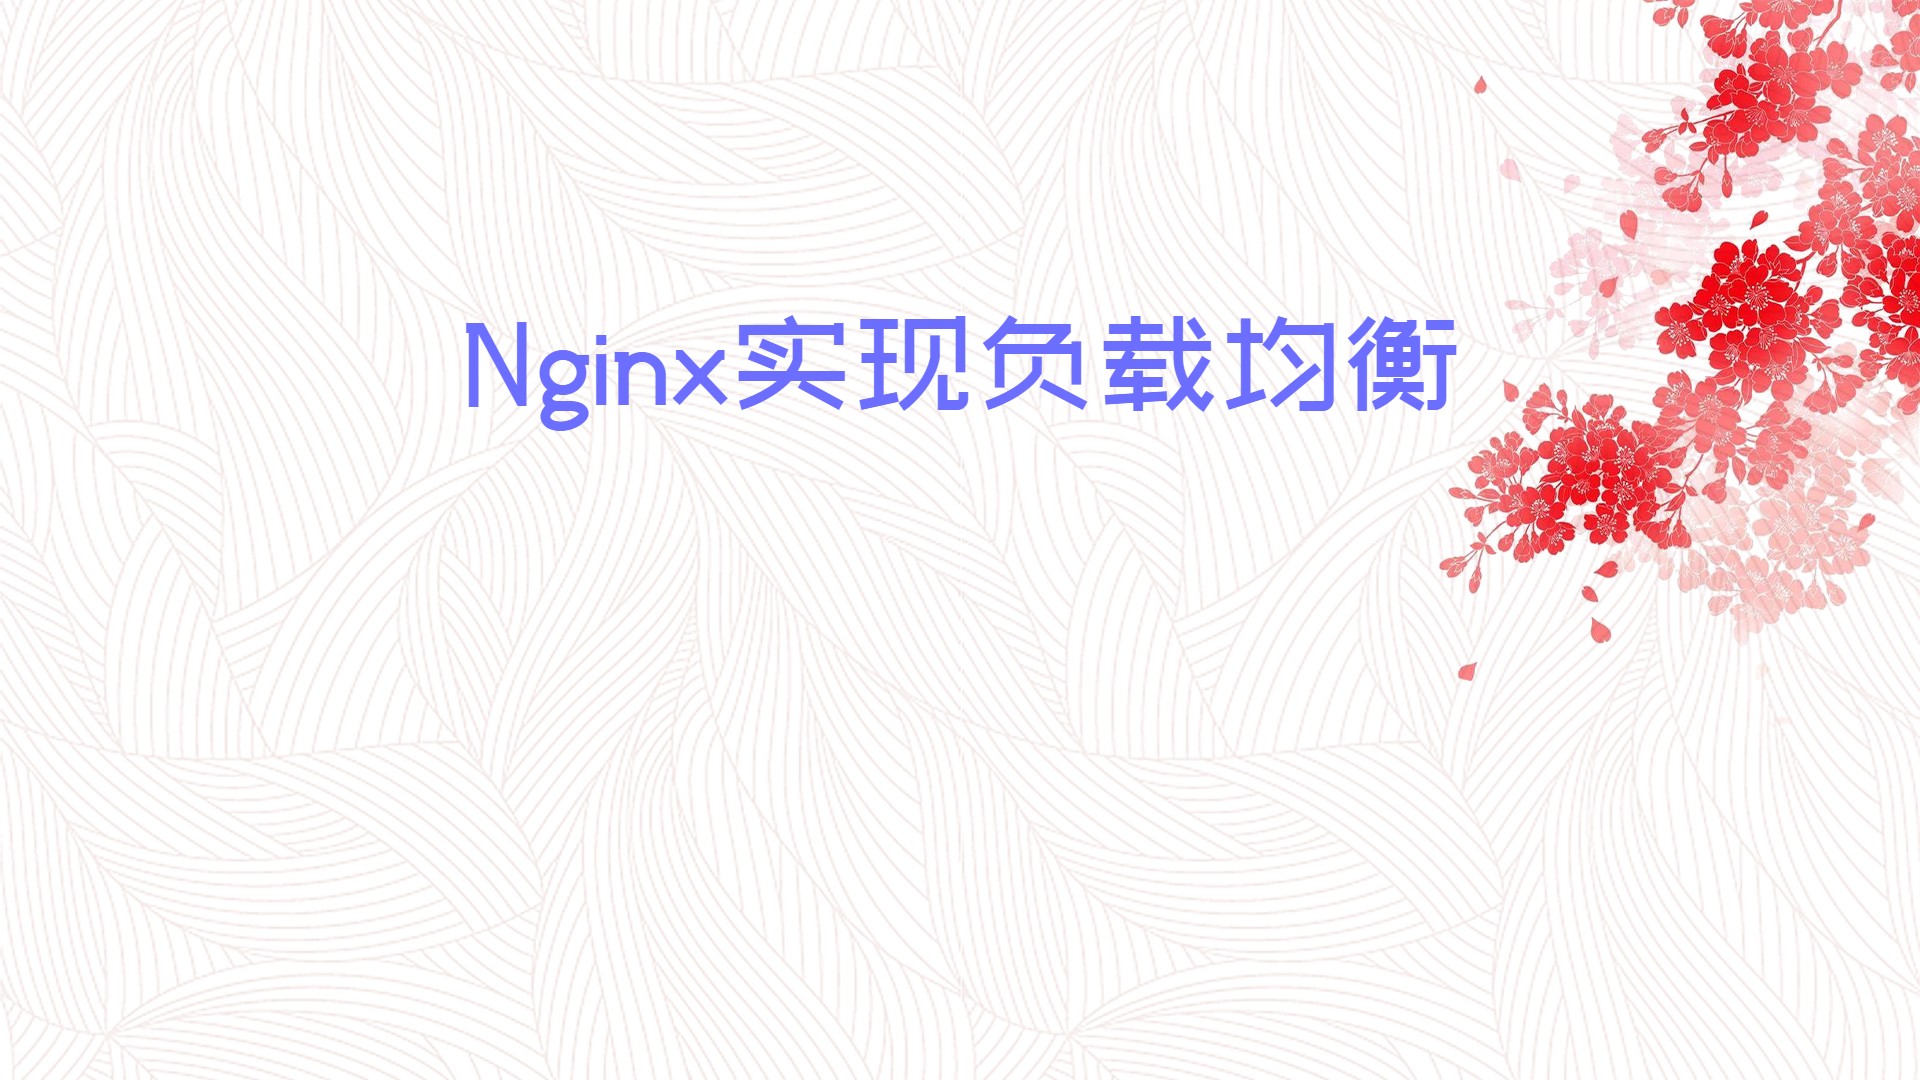 Nginx实现负载均衡